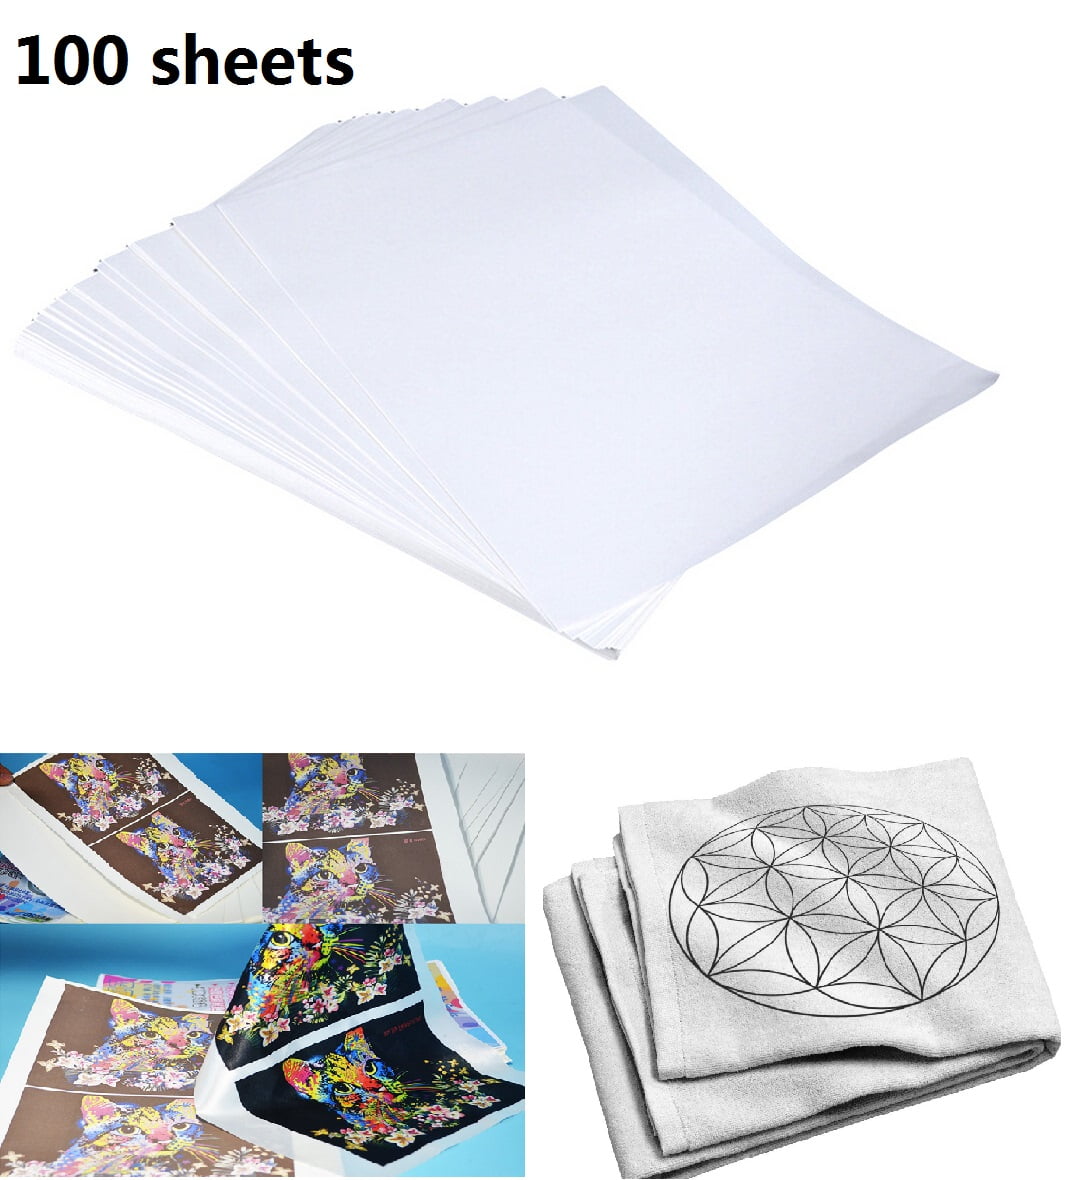 11x17 Inkjet Heat Transfer Paper (Light) - 100 Sheets @ $129.95